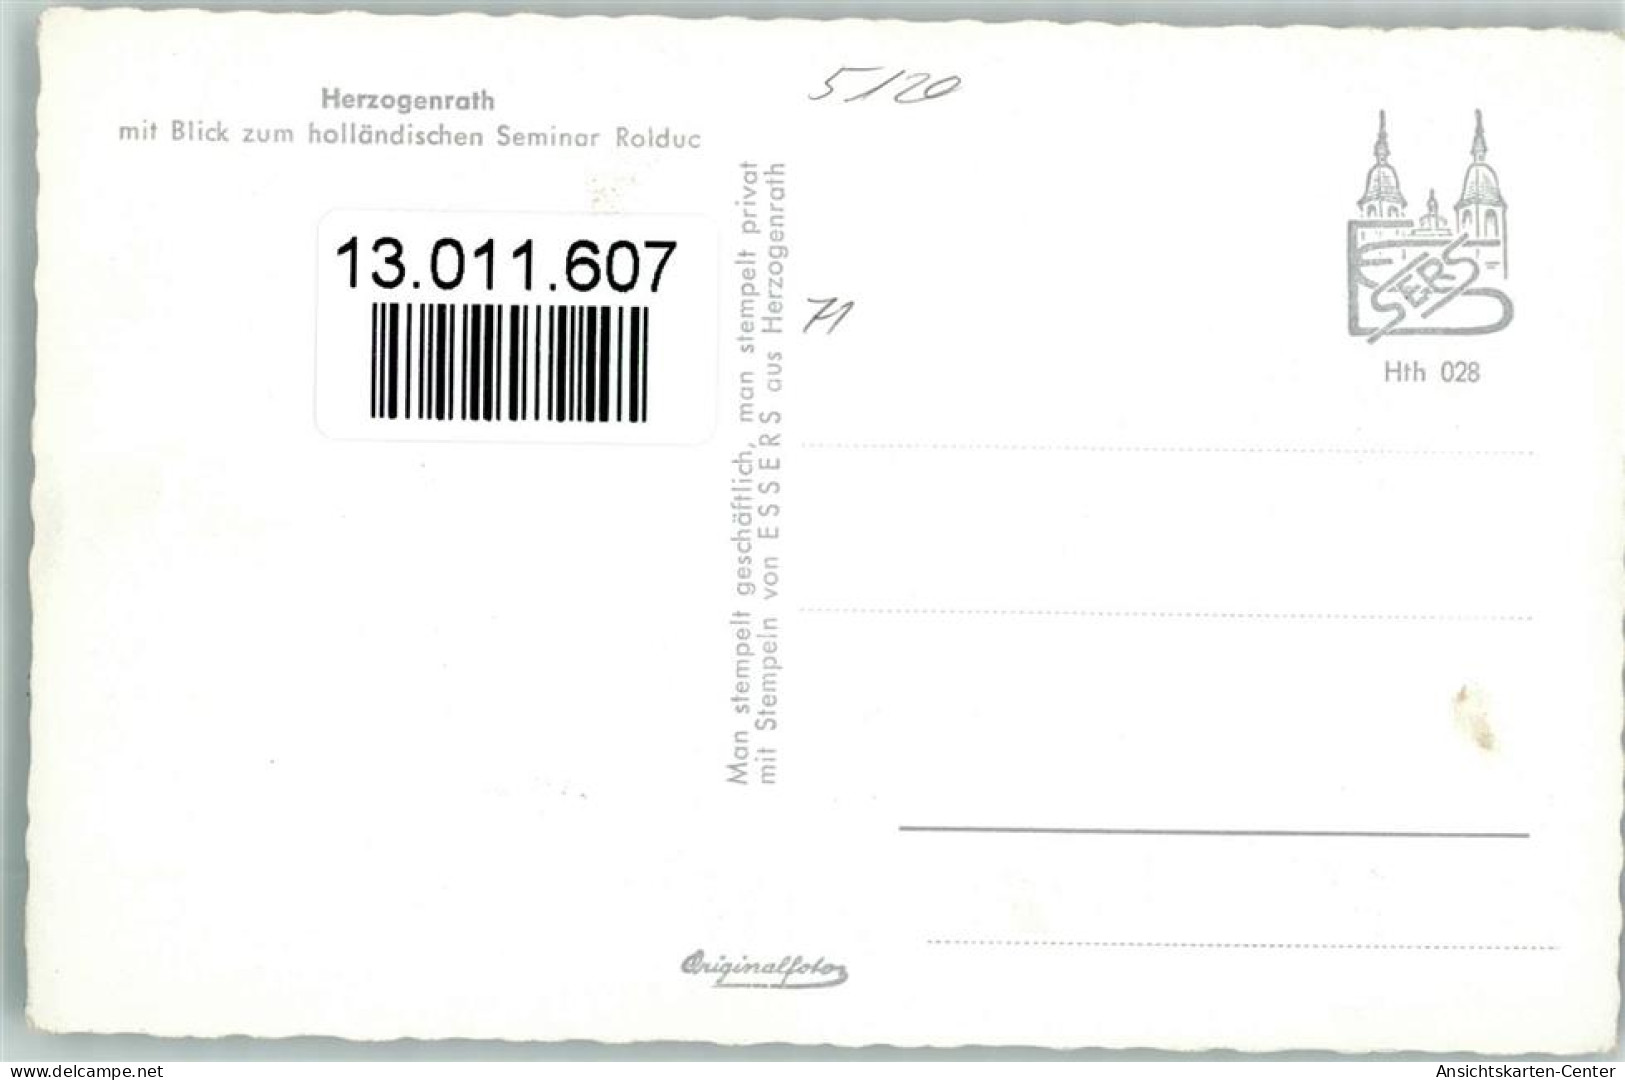 13011607 - Herzogenrath - Herzogenrath